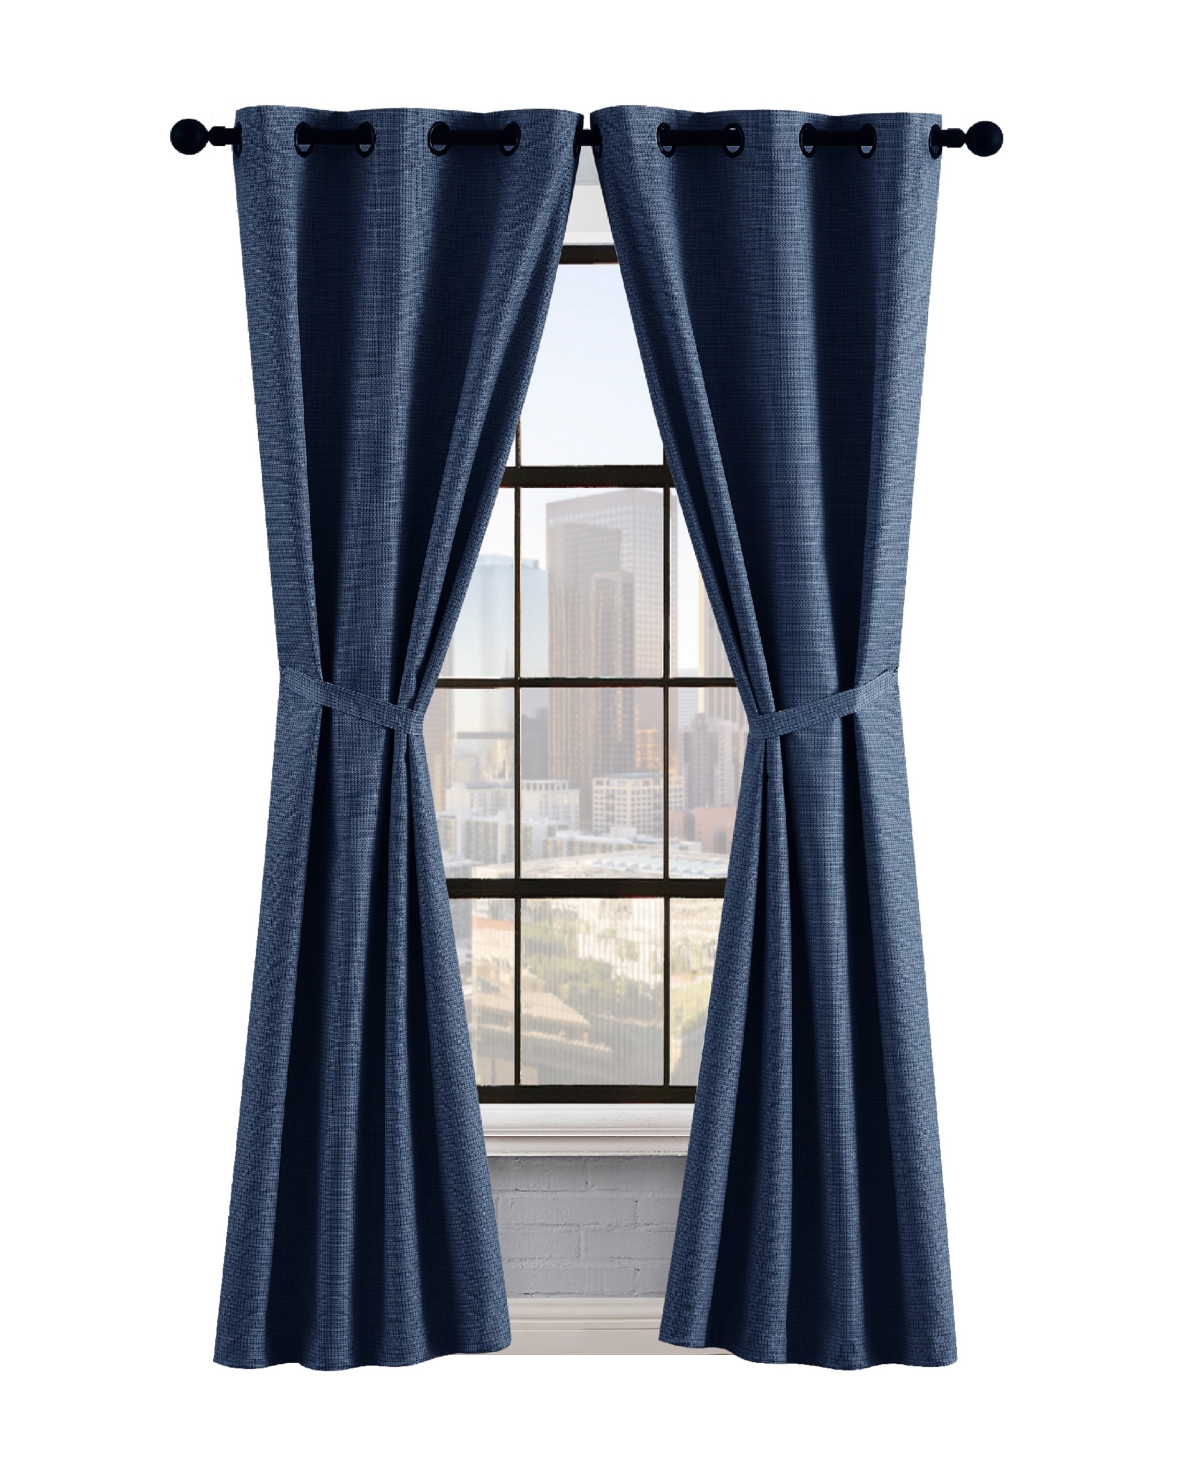 Lucky Brand Finley Textured Blackout Grommet Window Curtain Panel Pair With Tiebacks, 38" X 84" In Indigo Blue